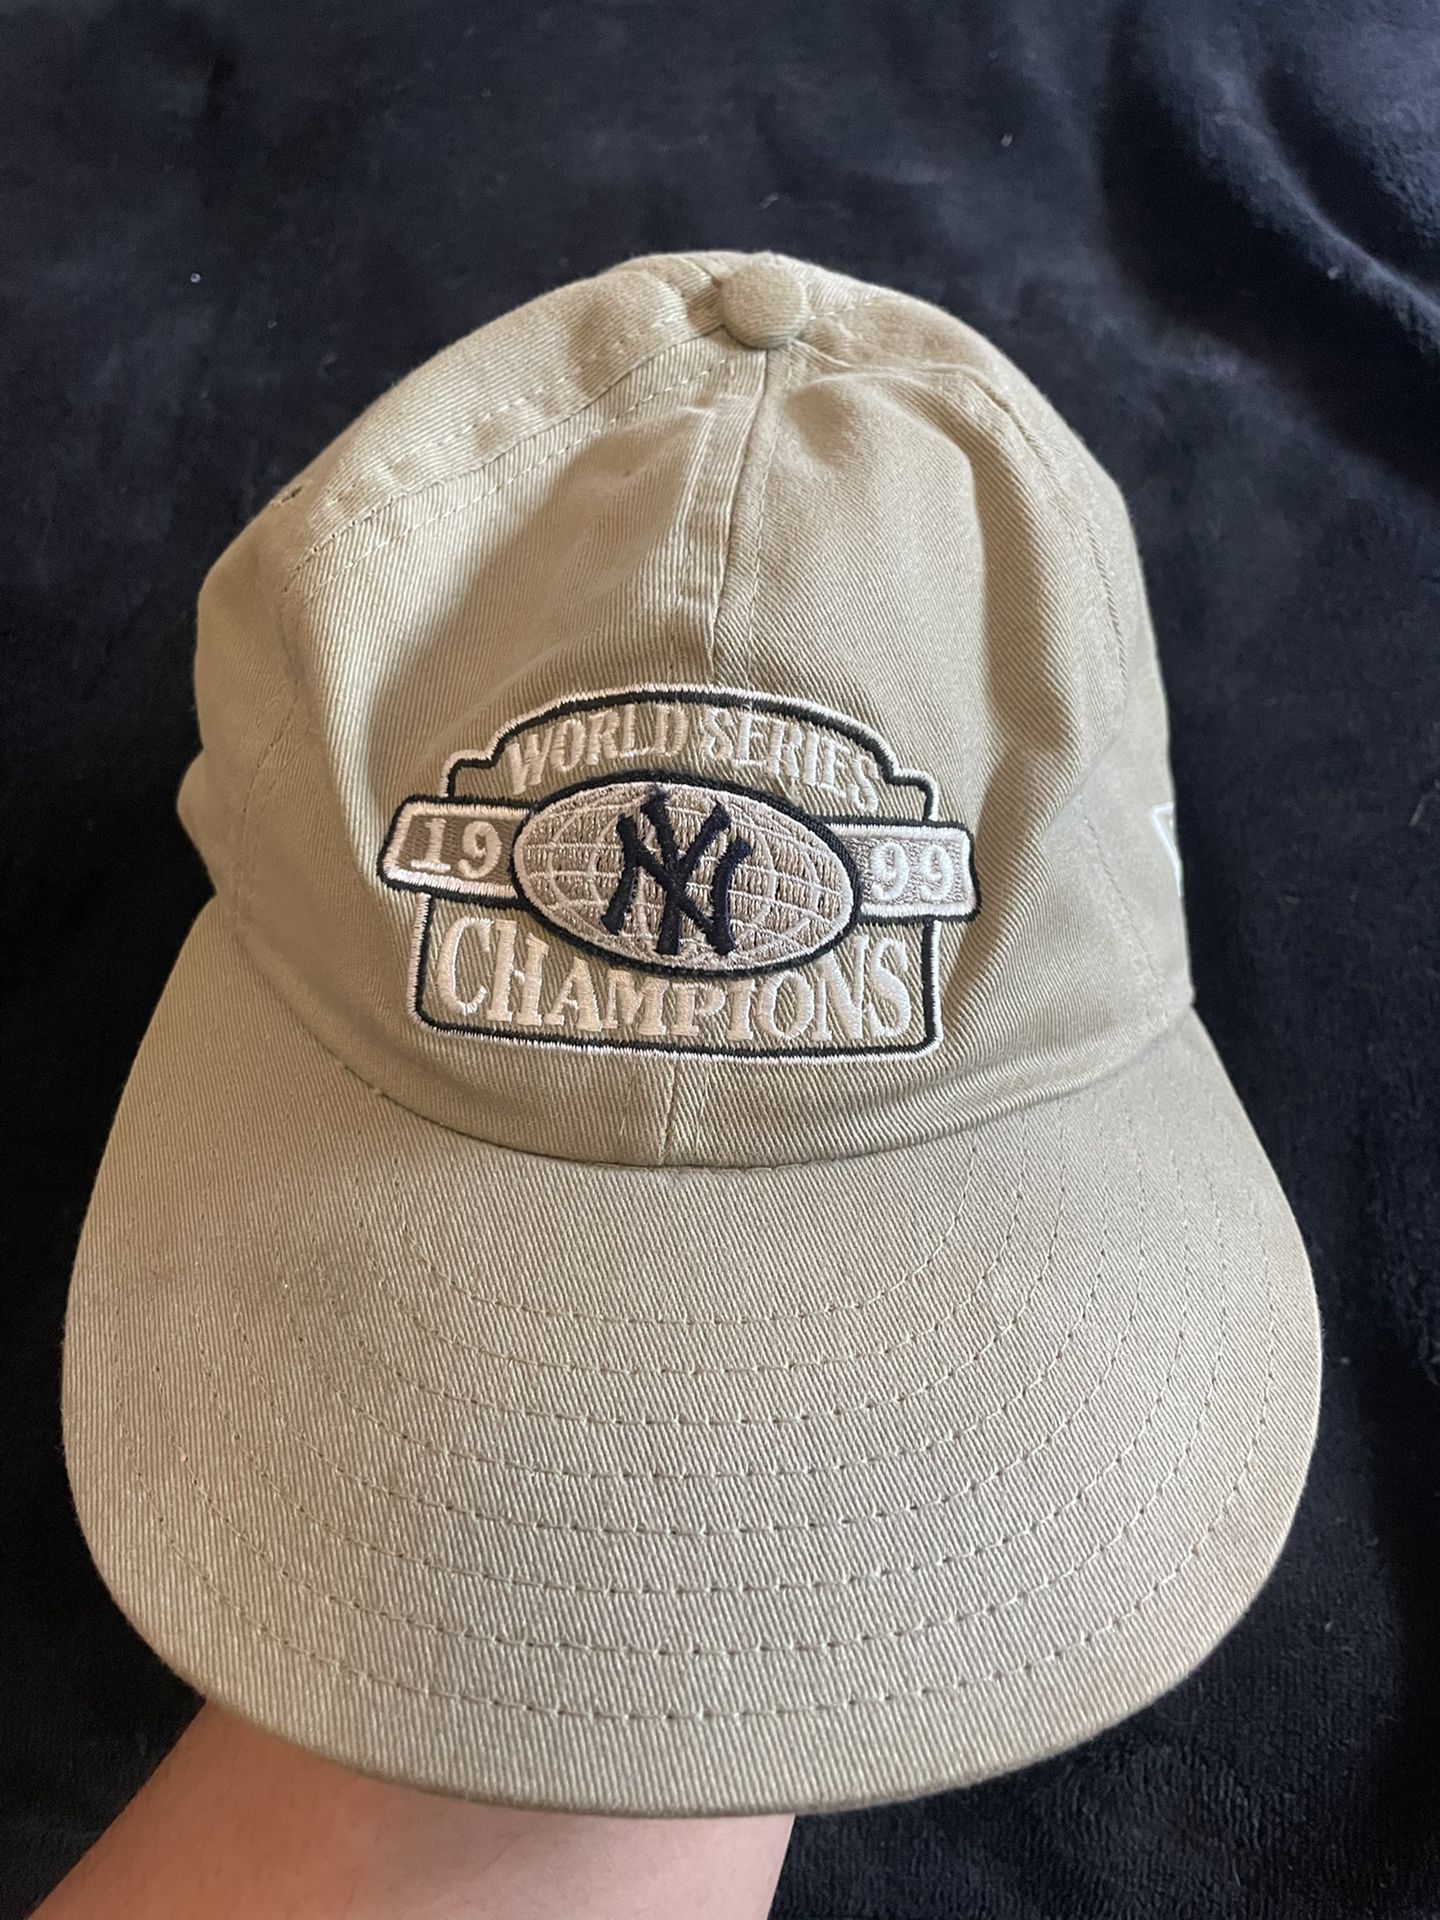 New York Yankees 1999 World Series Champions New Era Vintage Hat